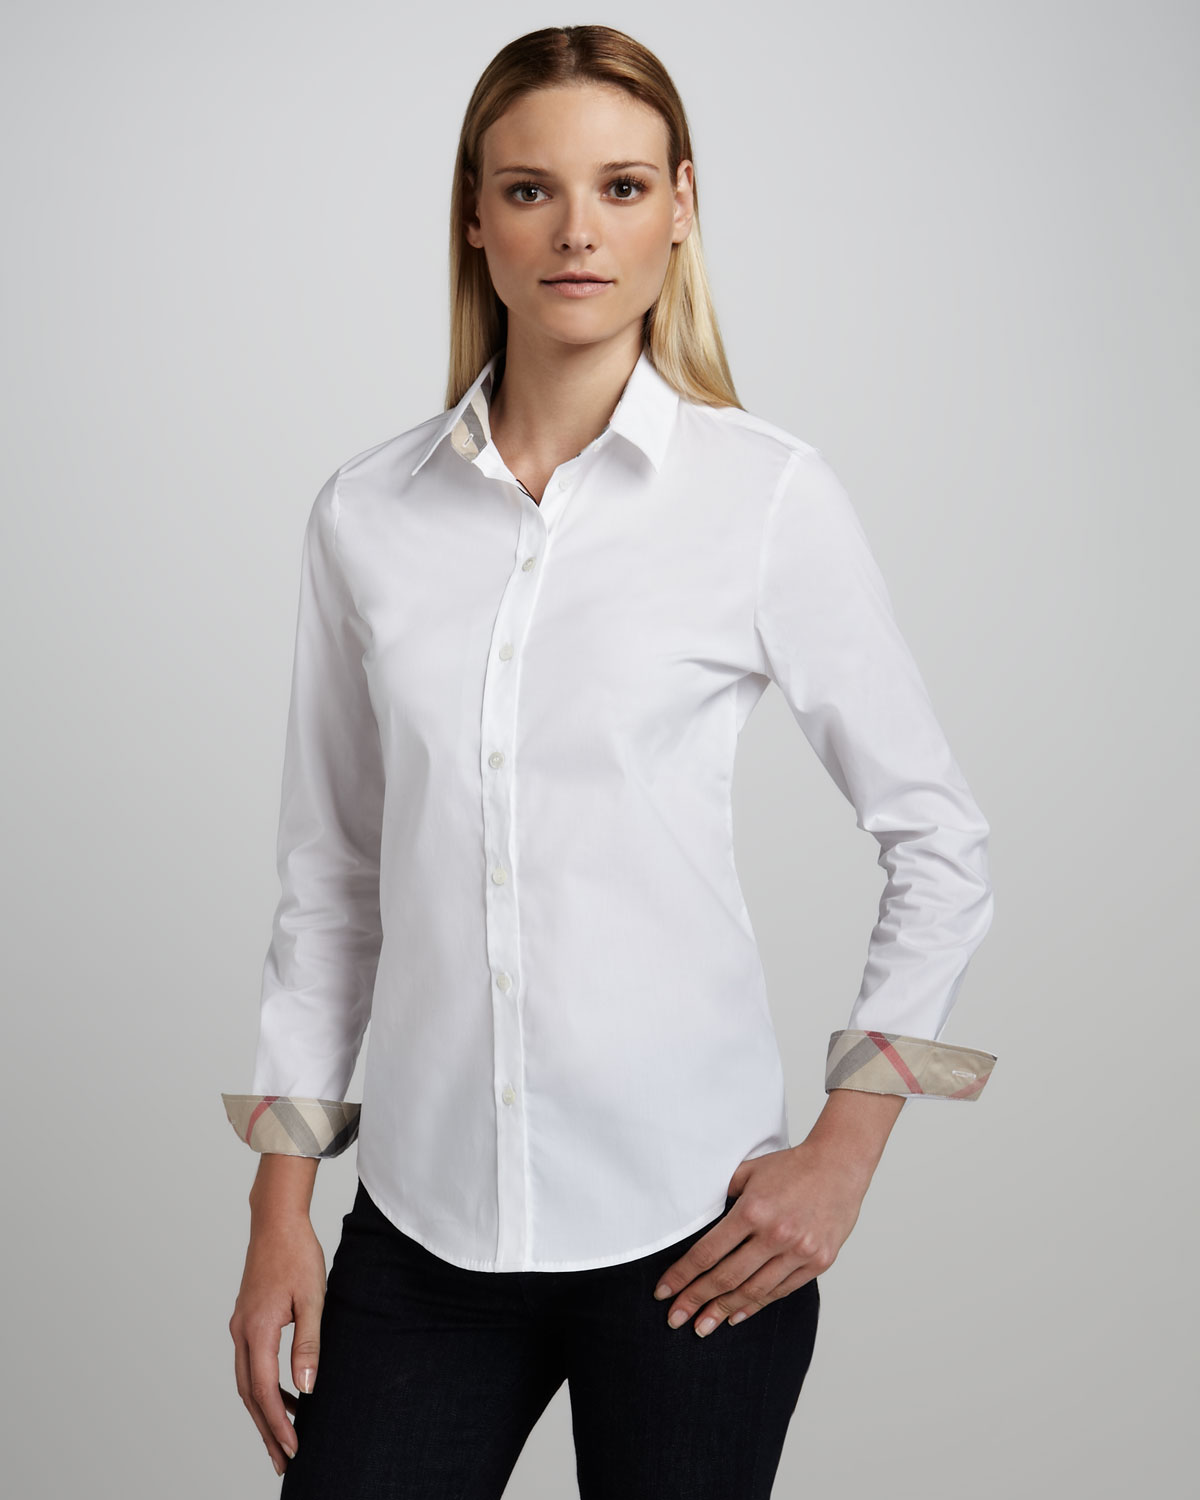 burberry white blouse